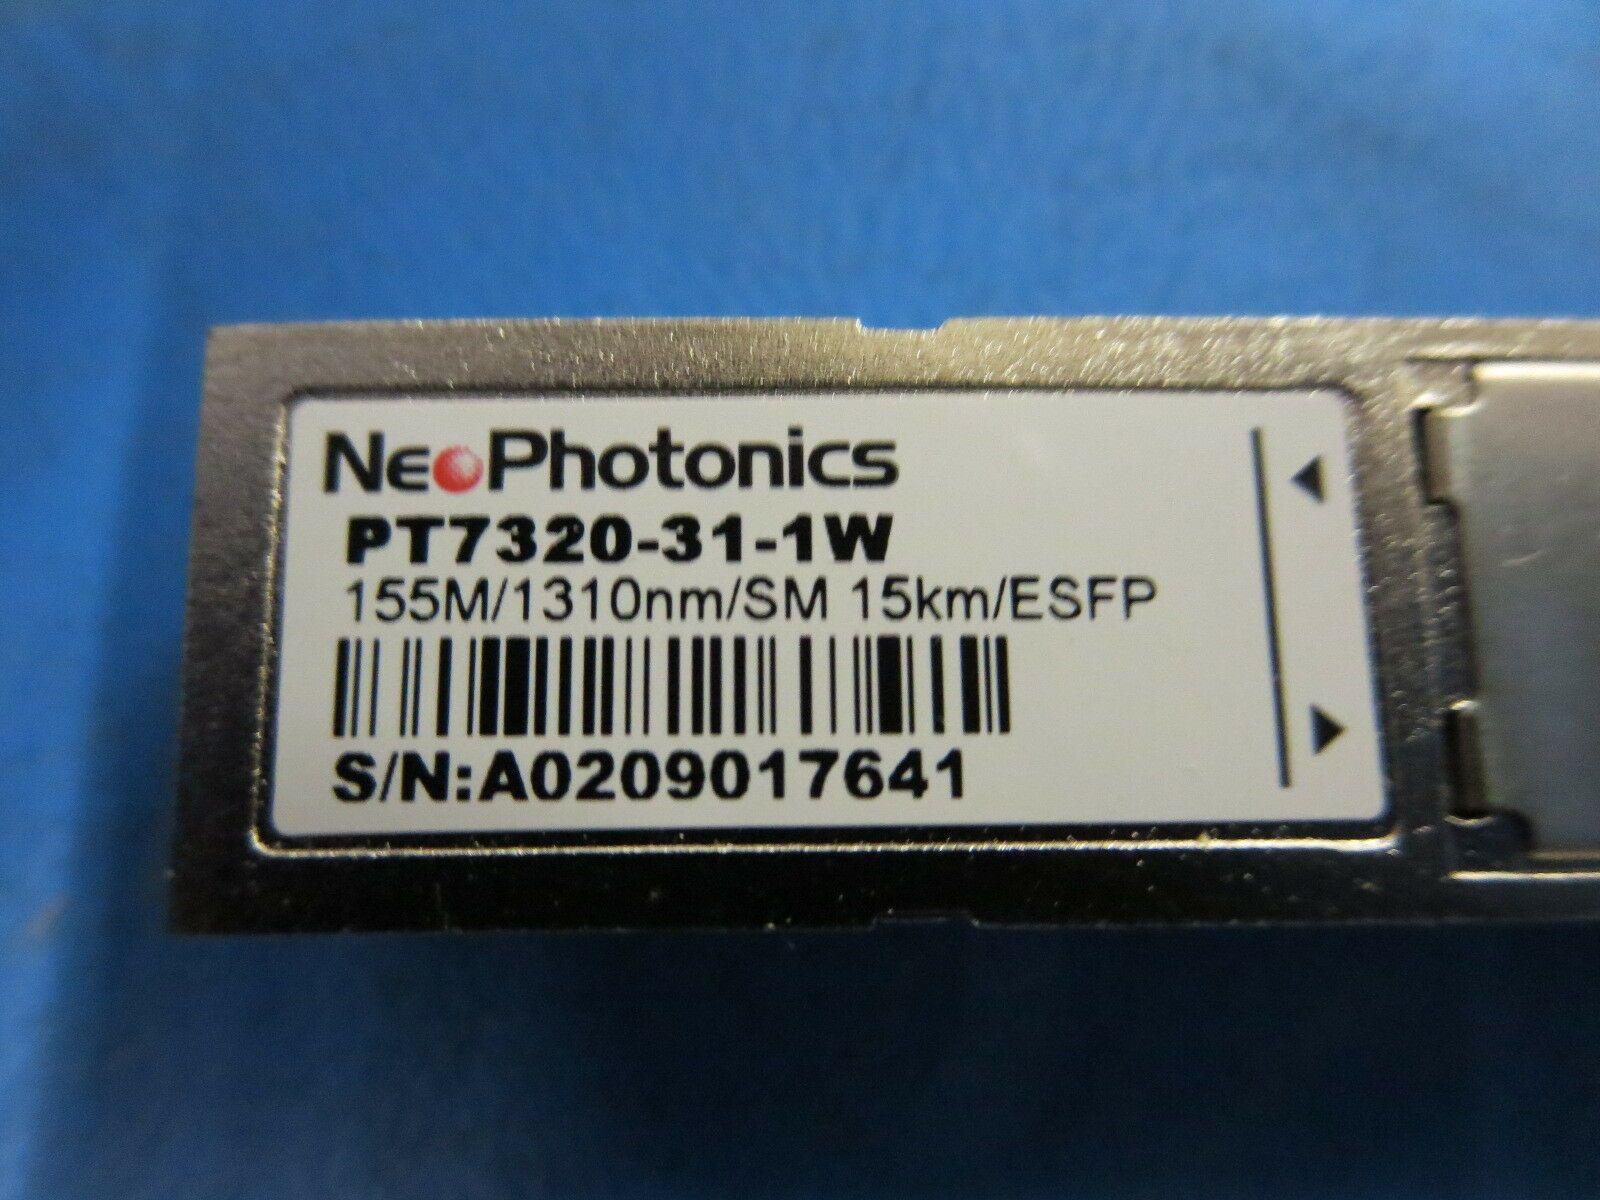 NeoPhotonics Logo - Nortel SR4119008E5 Optical Transceiver SFP 1310nm / Neophotonics  Pt7320-31-1w